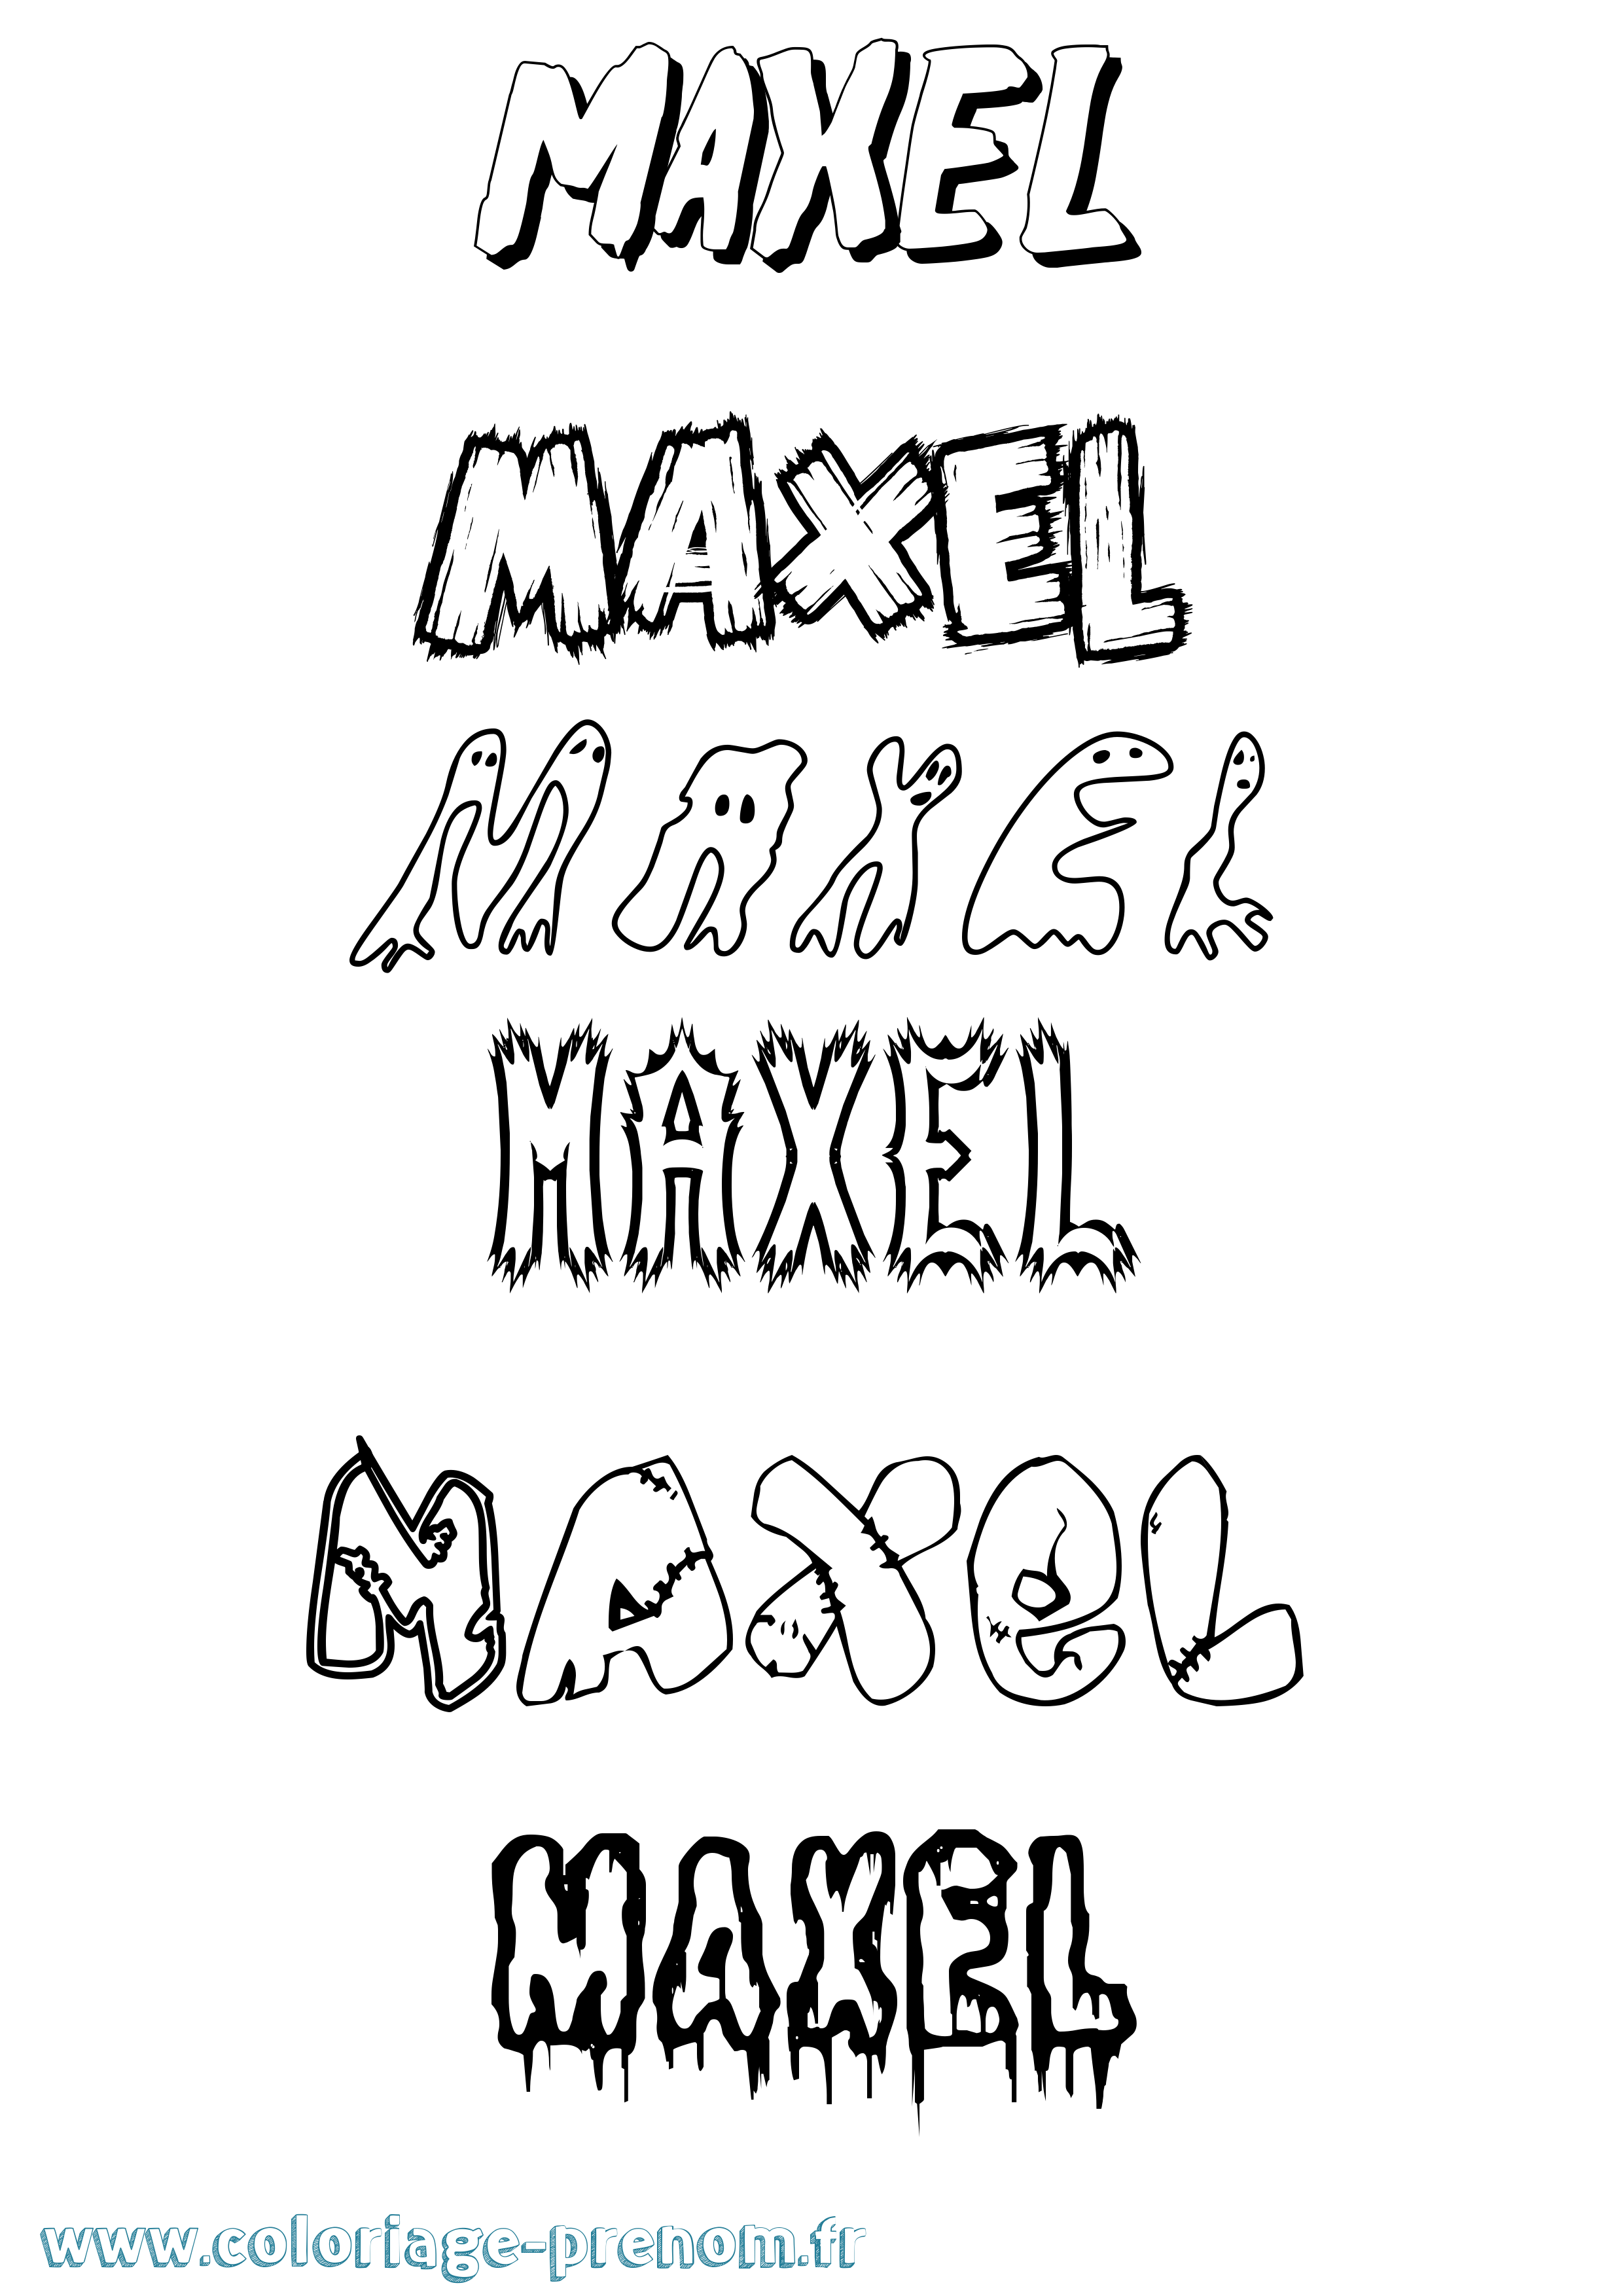 Coloriage prénom Maxel Frisson